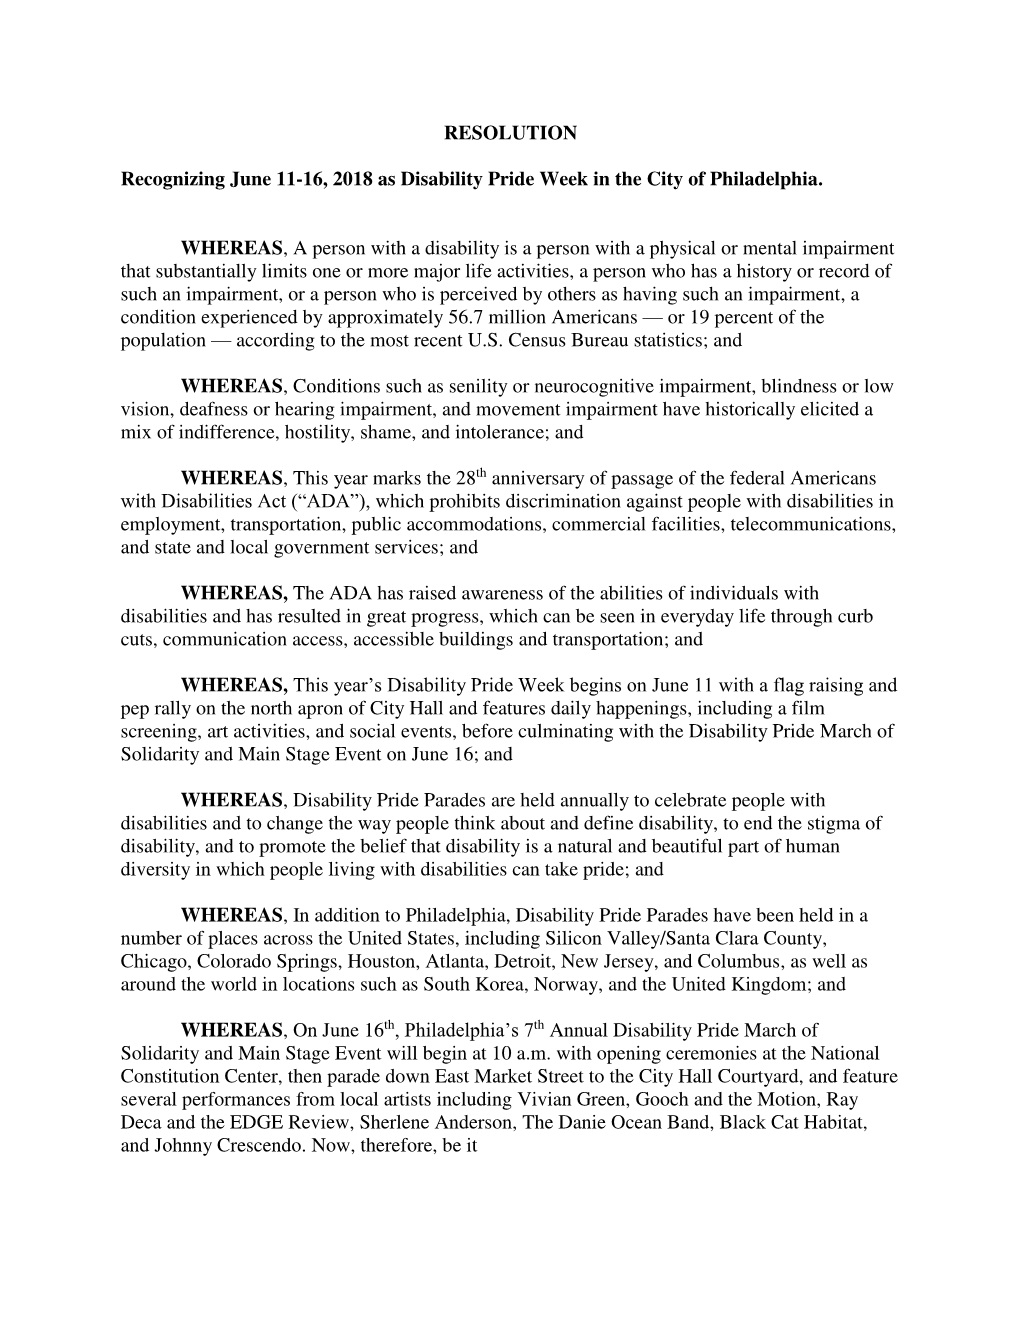 Authorizing the Philadelphia City Council Committee on Public